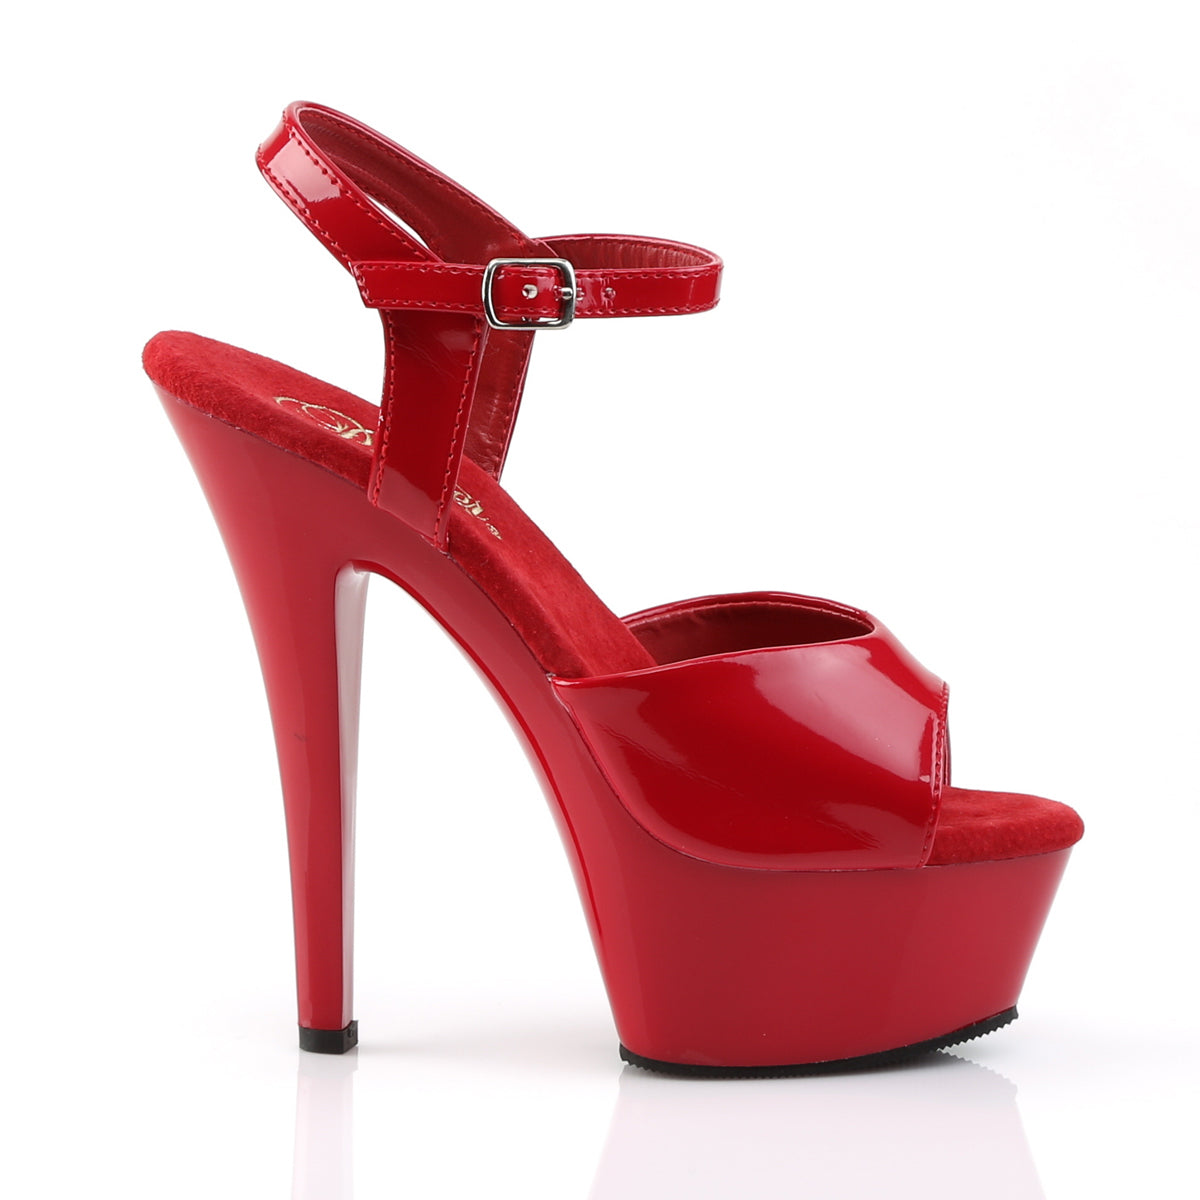 KISS-209 Pleaser 6 Inch Heel Red Pole Dancing Platforms-Pleaser- Sexy Shoes Fetish Heels